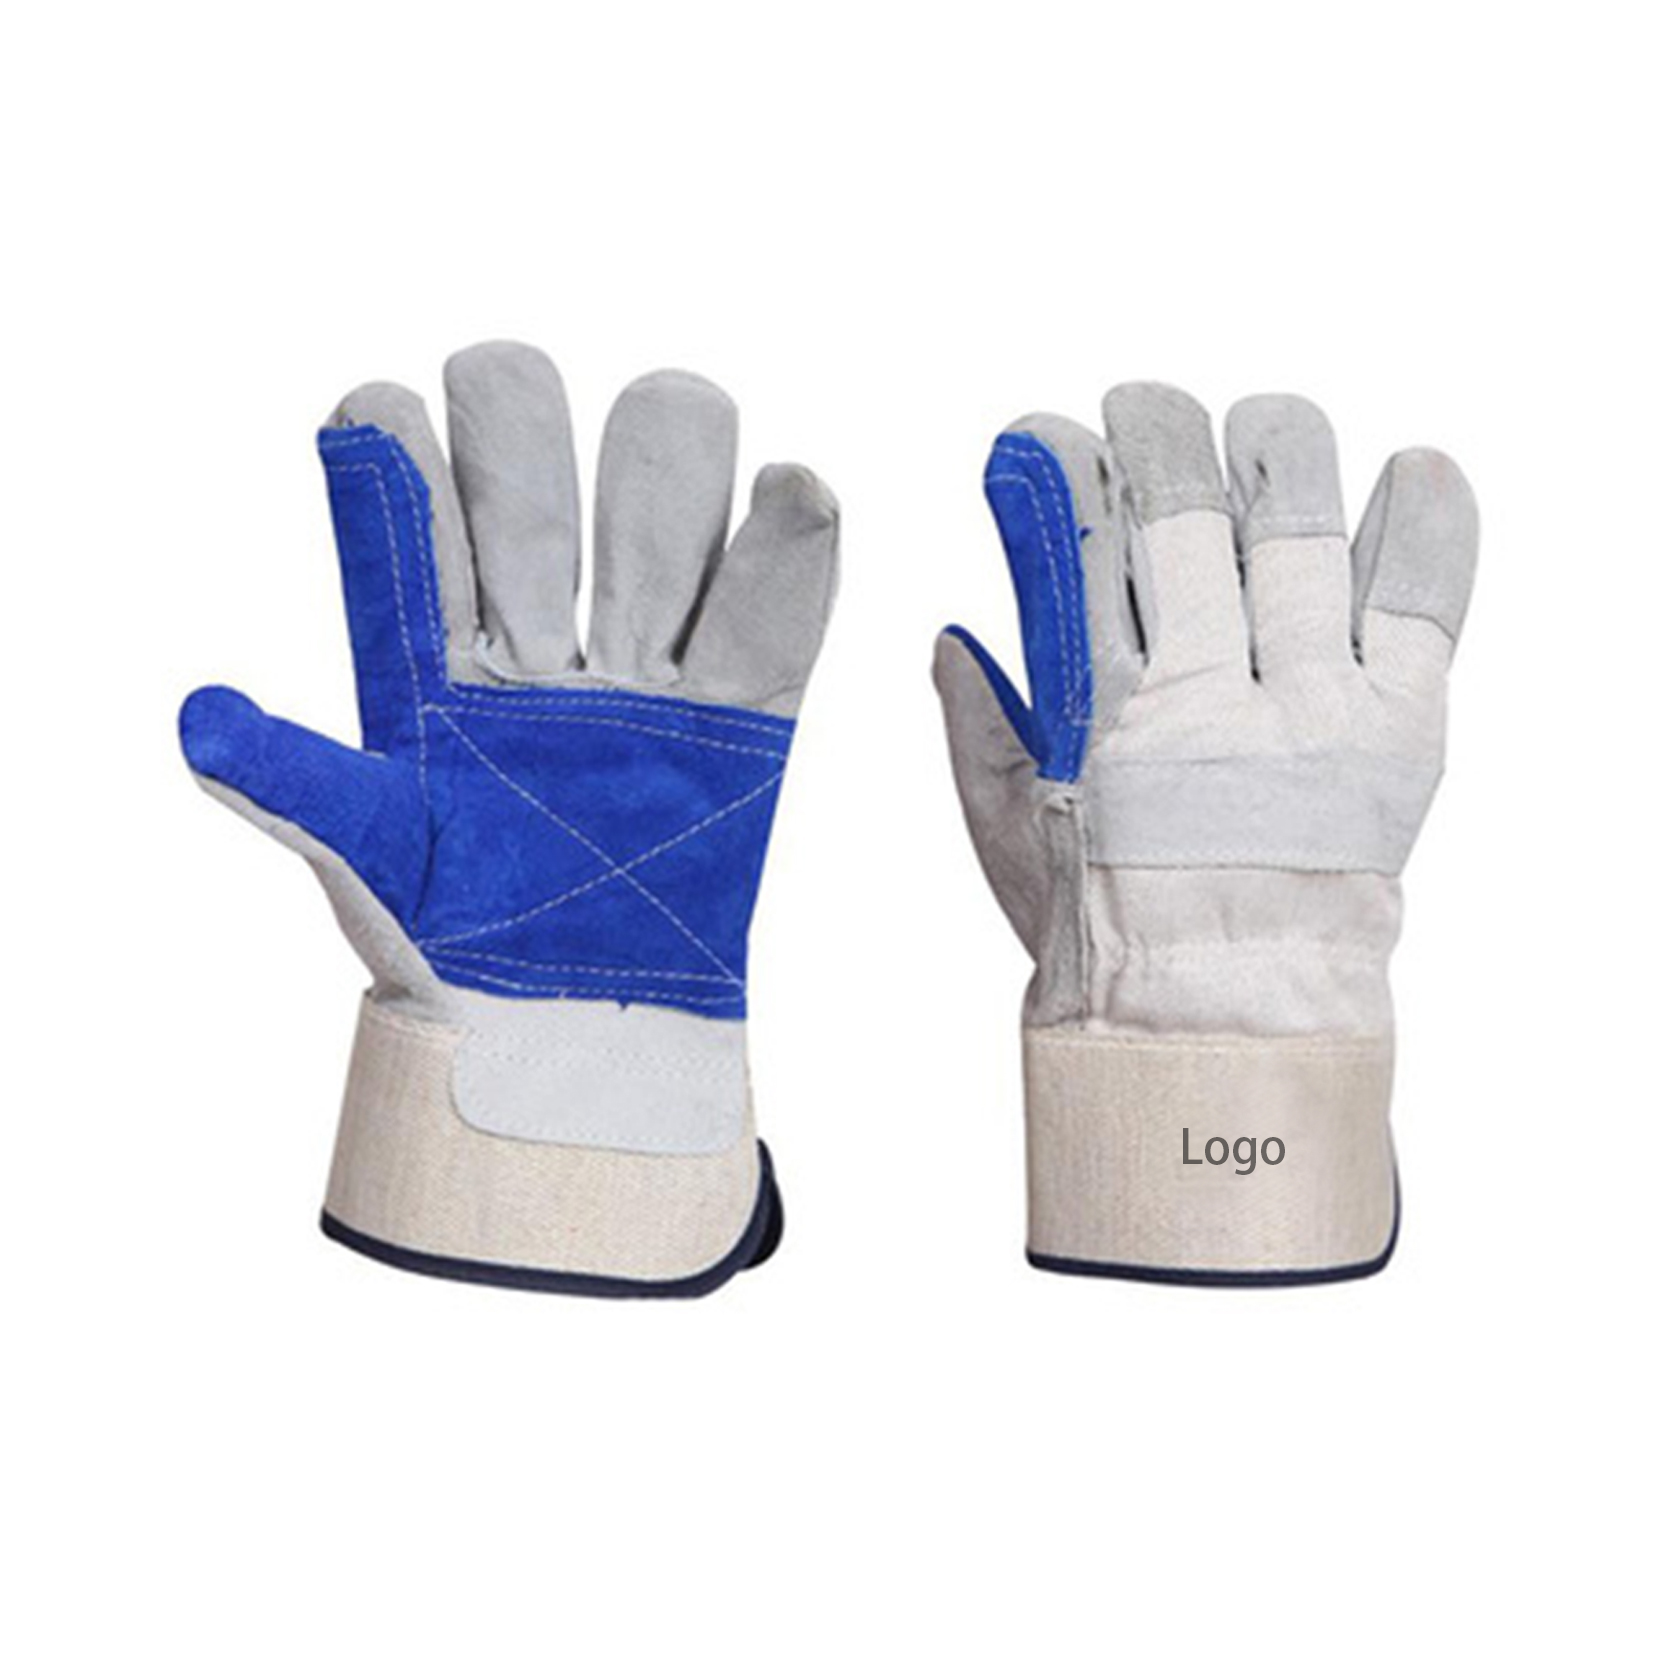 Ewlekariya Leather Work Gloves Men, Glovên Baxçevaniyê, Rigger Gloves, Builder Gloves